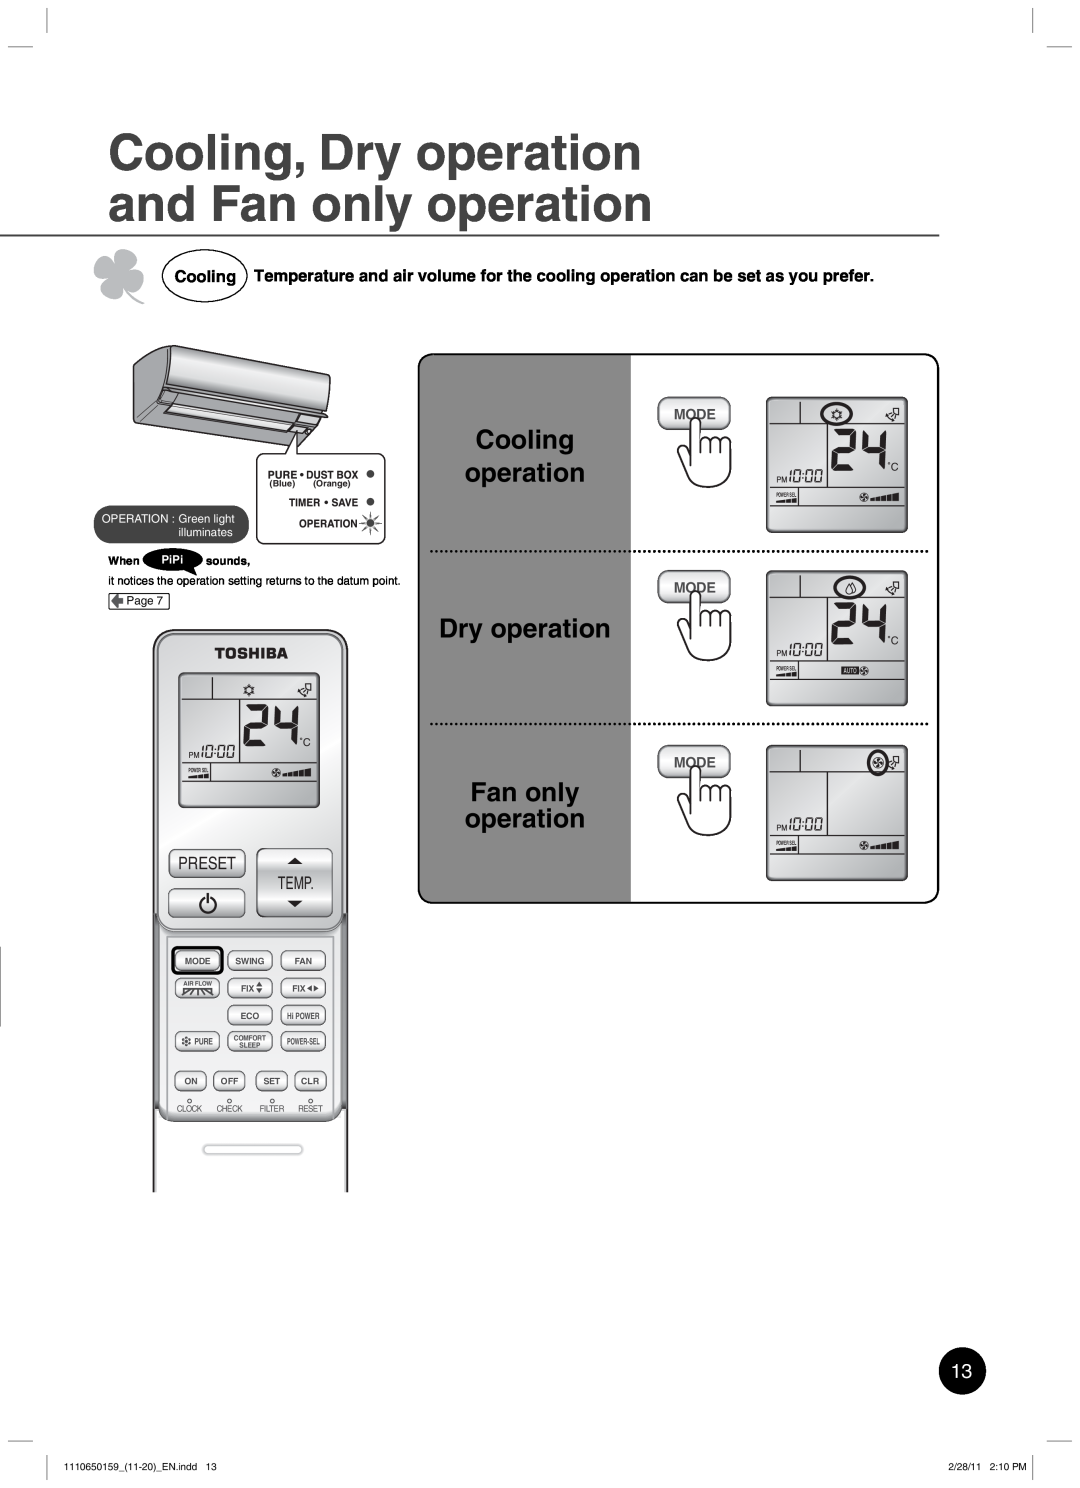 Toshiba RAS-10JKCVP Cooling, Dry operation and Fan only operation, Cooling operation, Preset Temp, Mode, ˚C ˚C, Sleep 